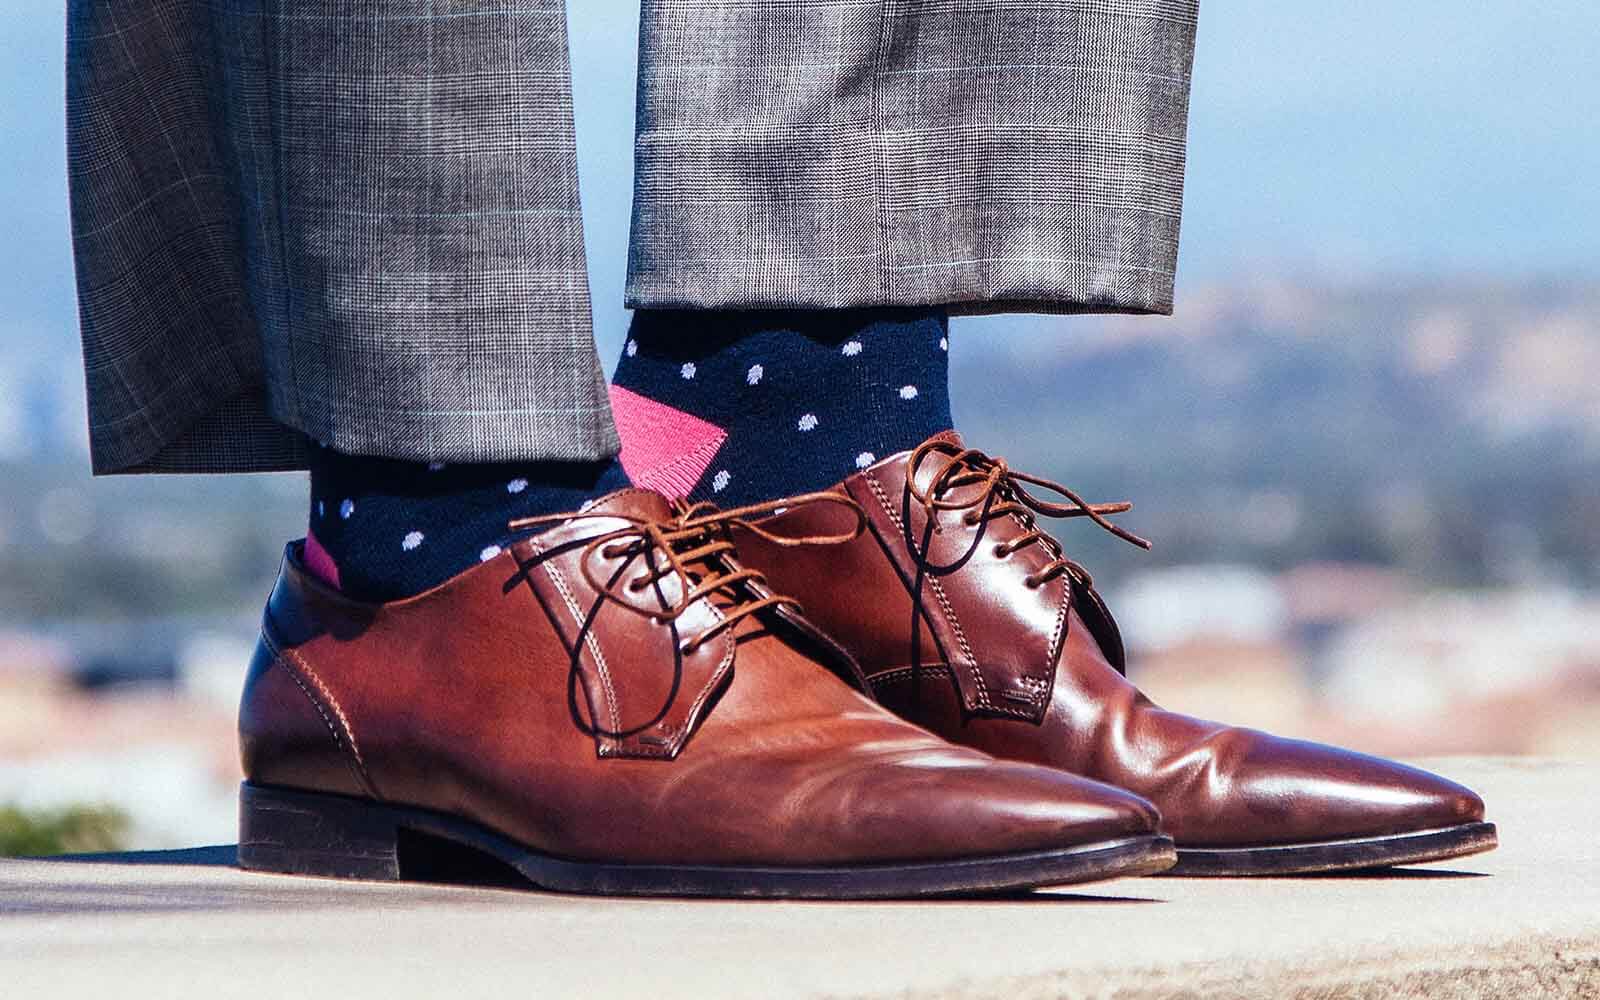 how to wear custom dress socks the right way